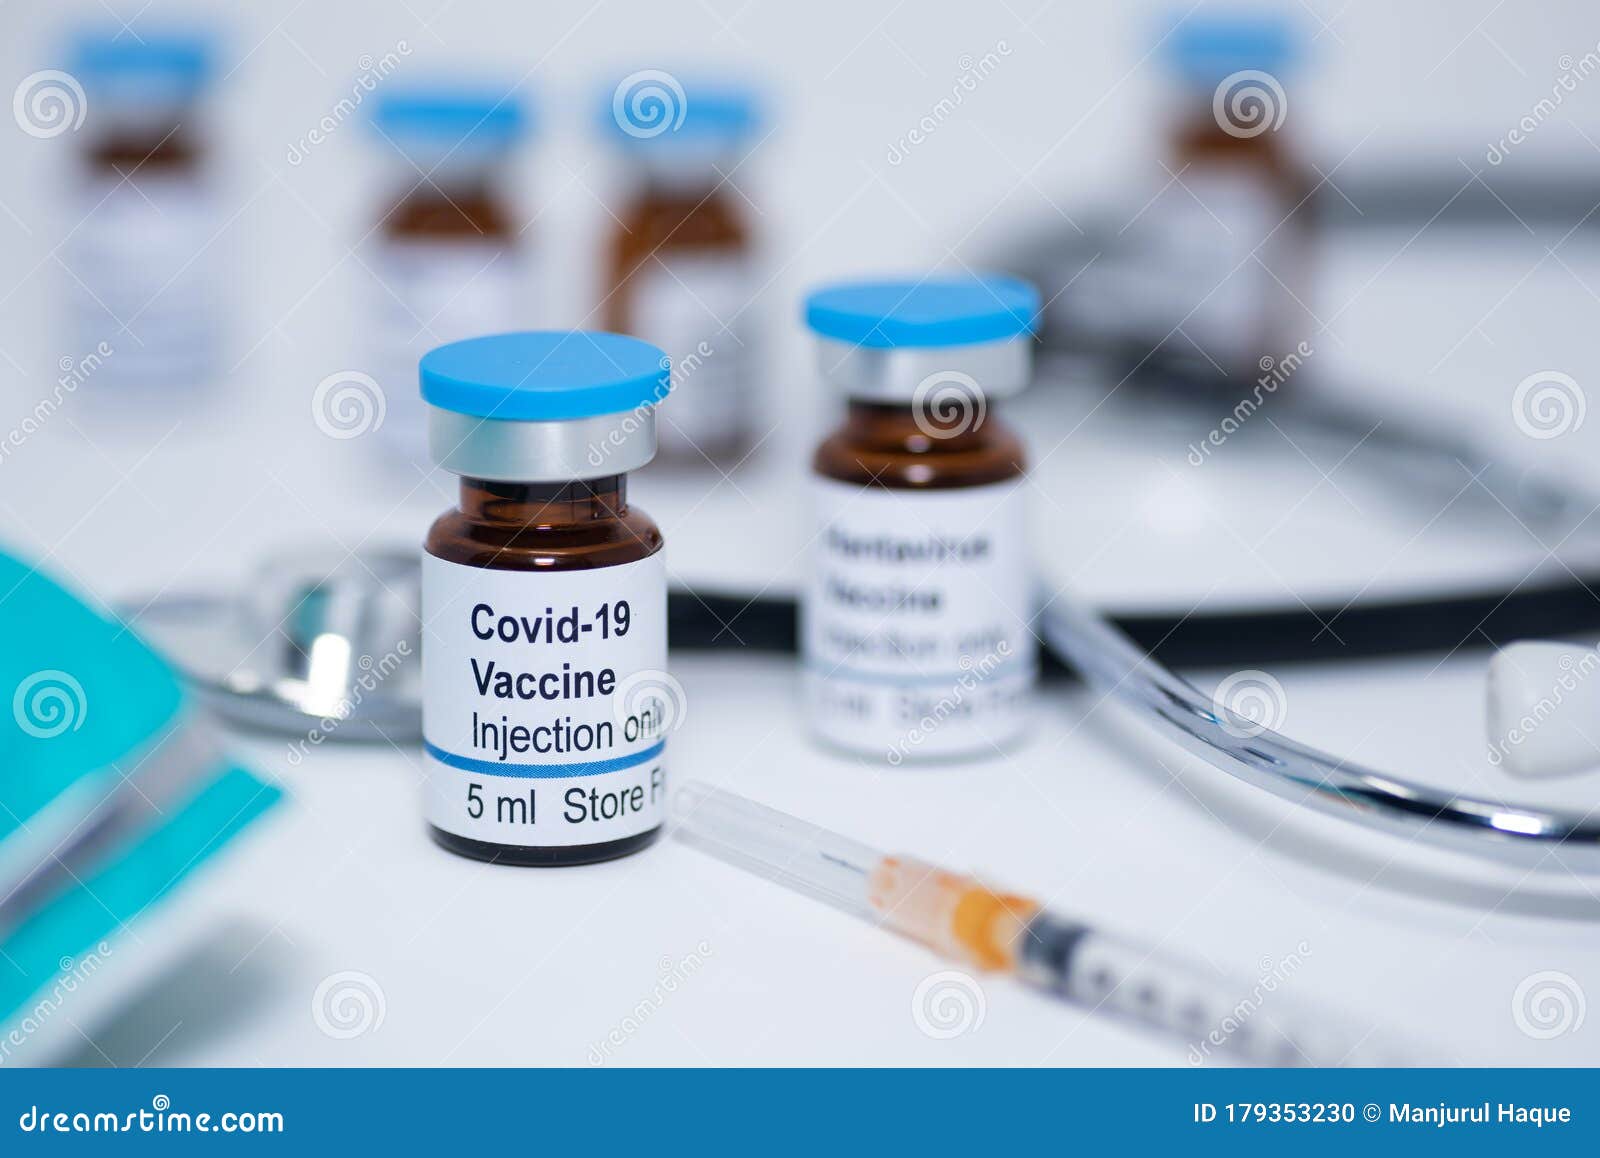 novel coronavirus covid-19 vaccine vial with syringe and stethoscope